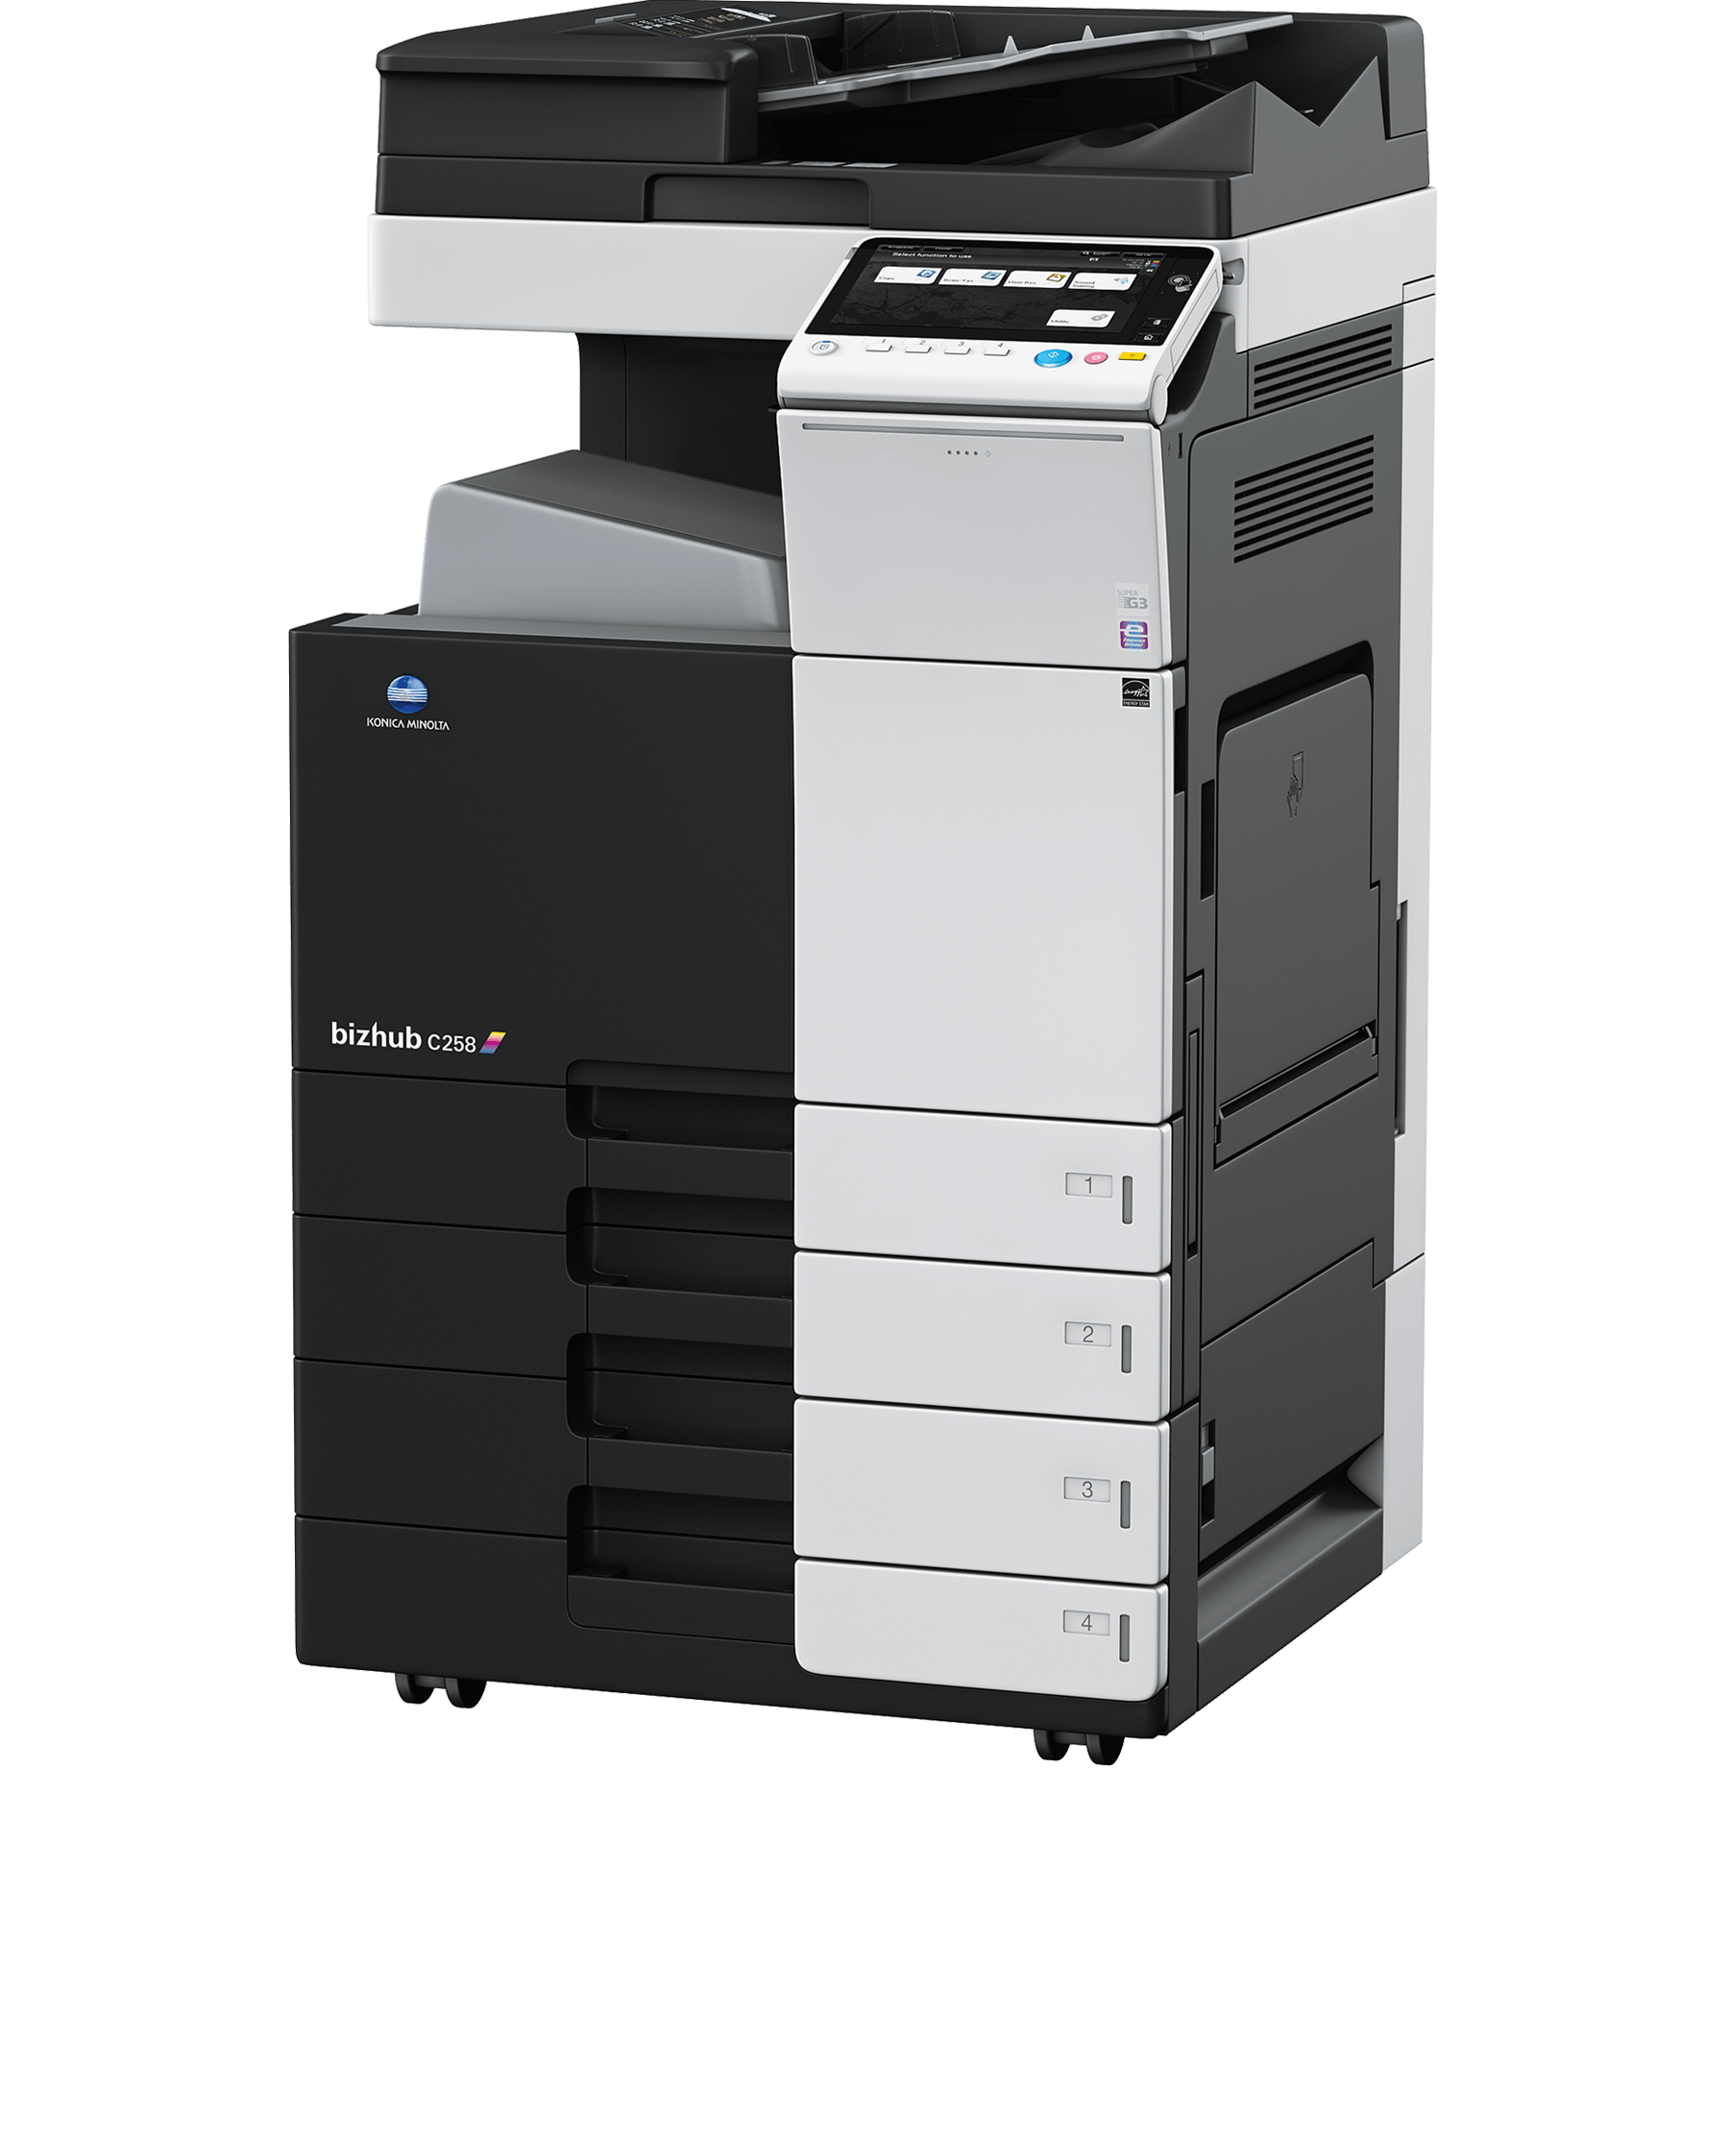 Konica Minolta photocopy machine rental